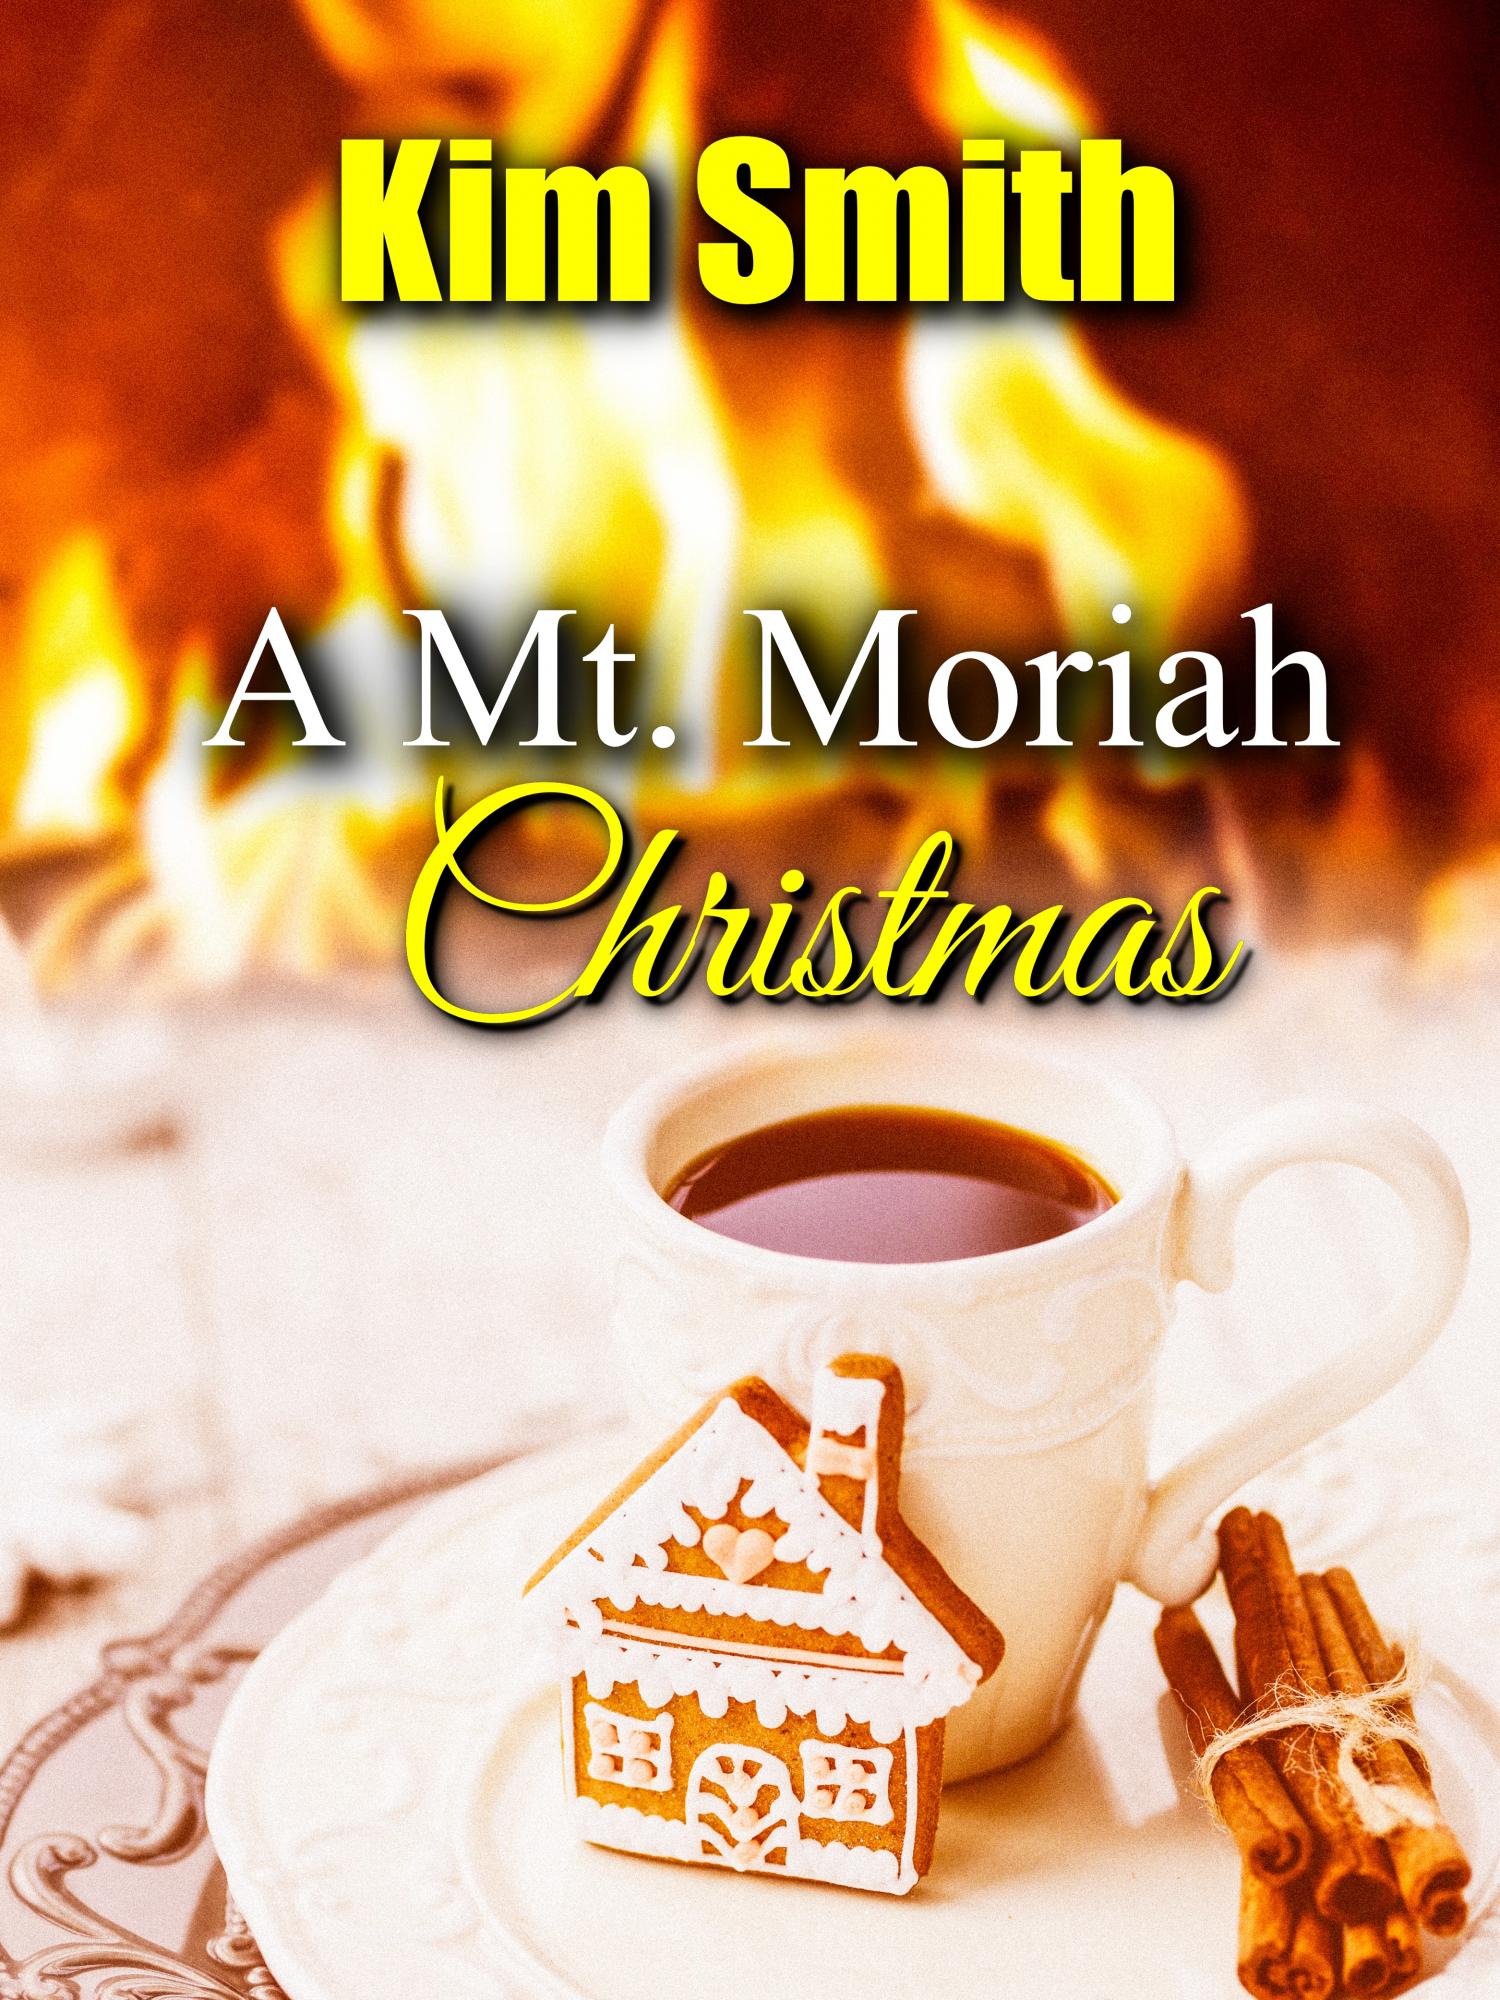 A Mt. Moriah's Christmas cover